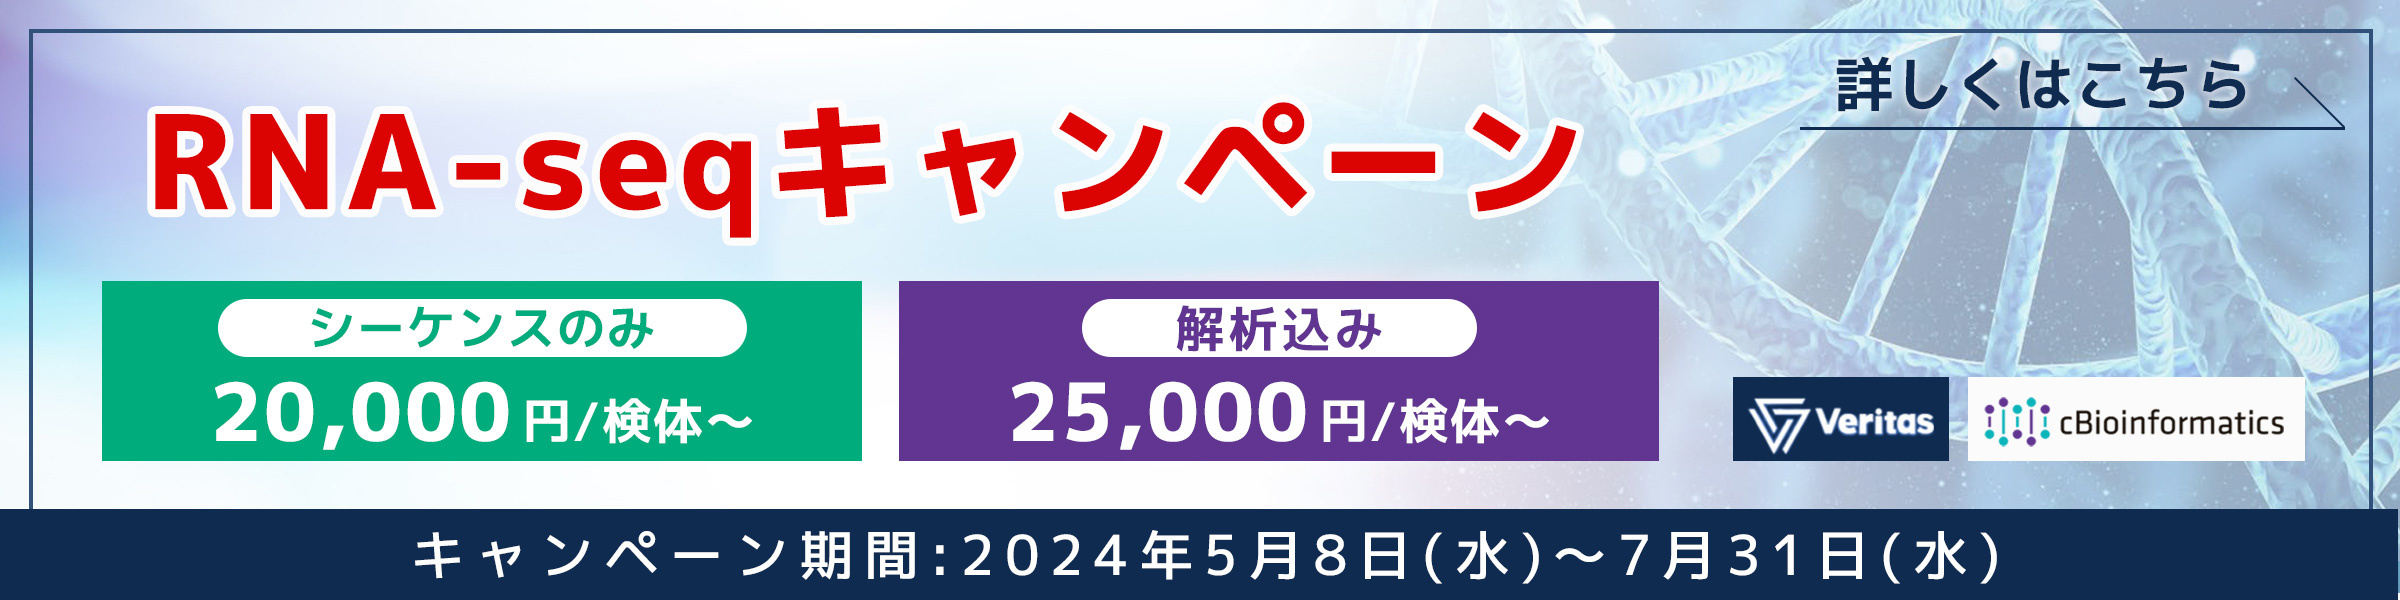 【NGSキャンペーン】 mRNA-seq最大20,000円/サンプル+解析5,000円/サンプル